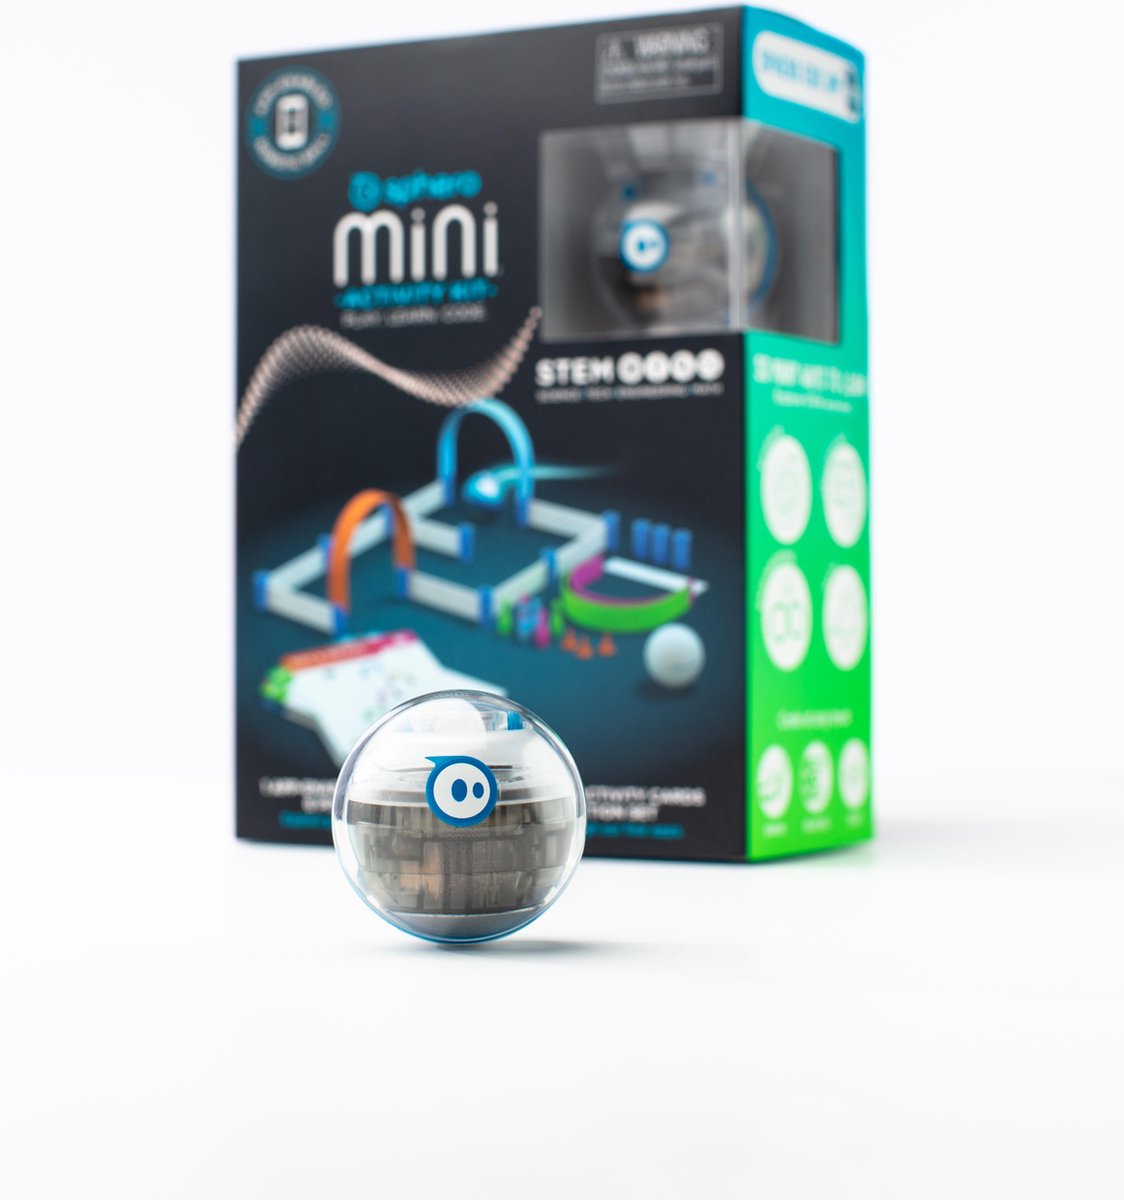 Sphero Mini Activity Kit - Robot - Educatief Speelgoed